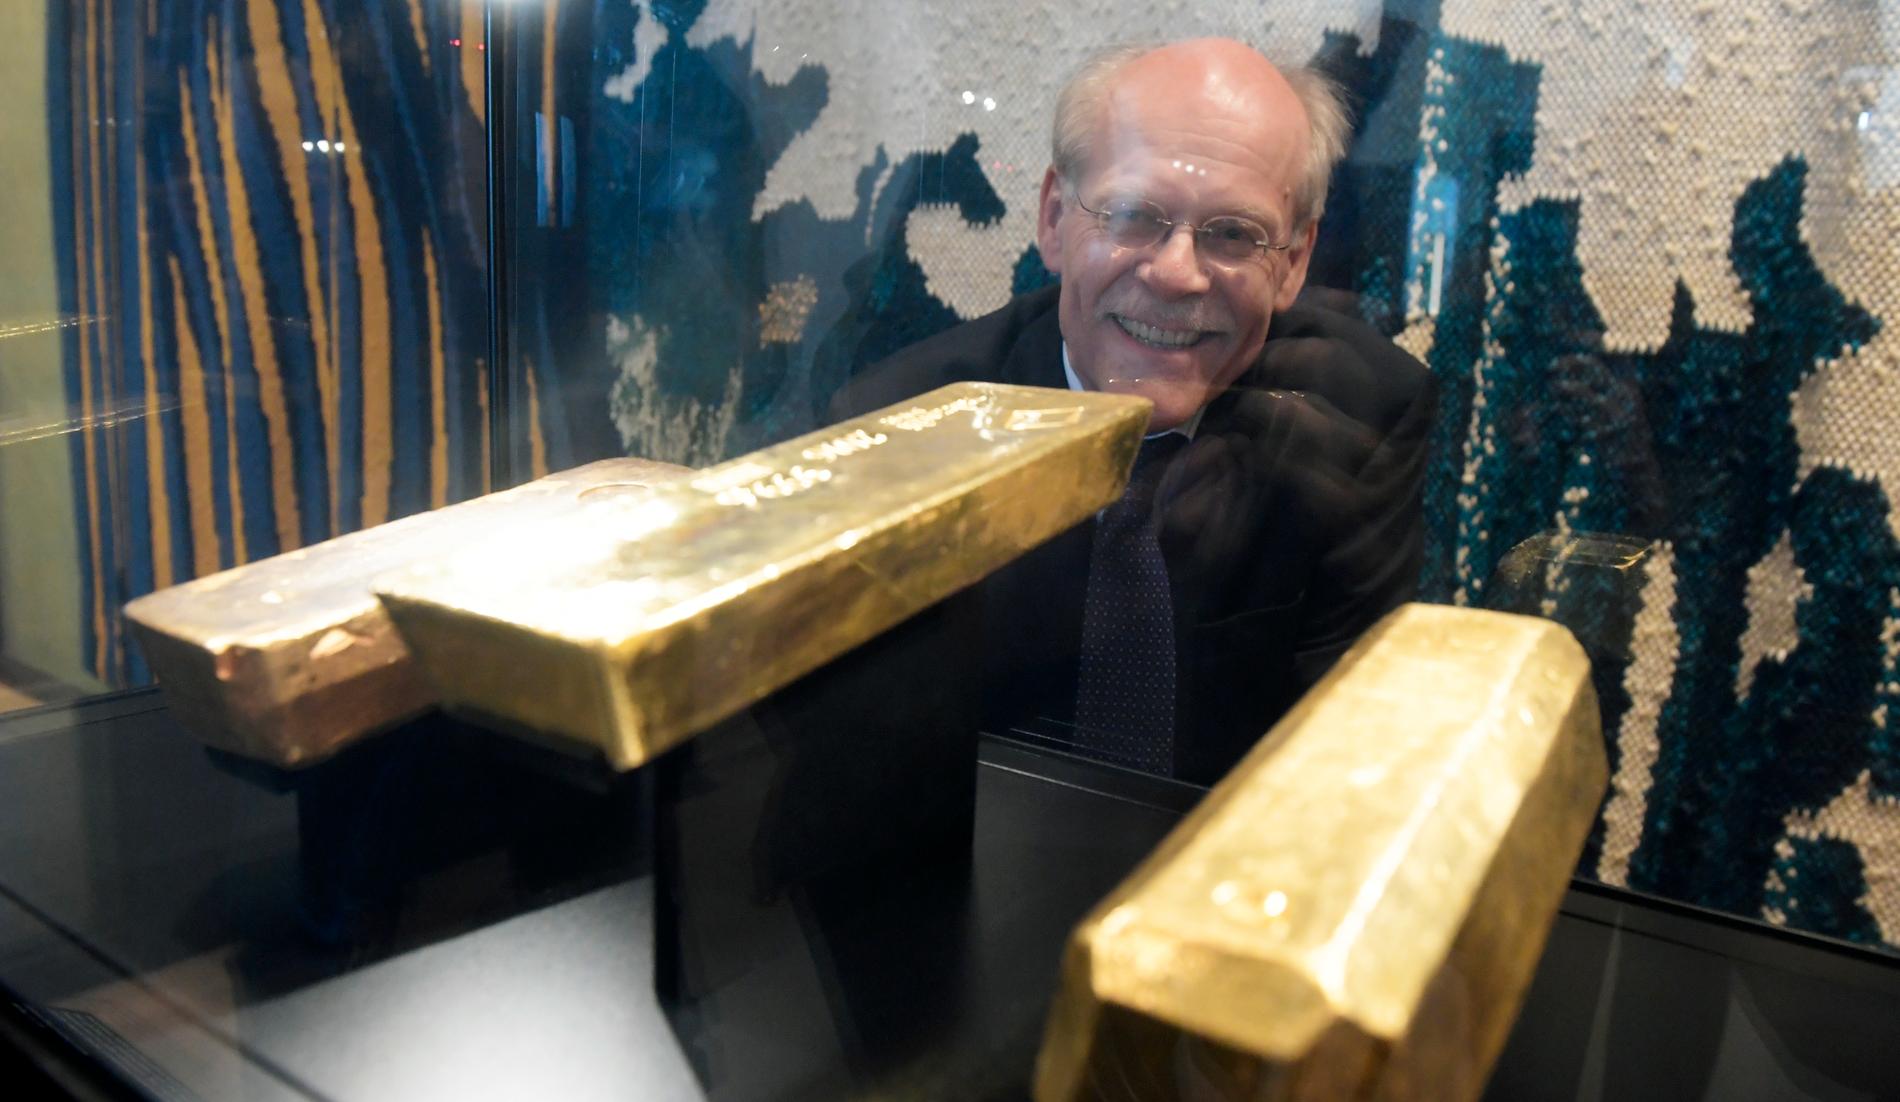 Förre riksbankschefen Stefan Ingves med guldtackor från Sveriges guldreserv.